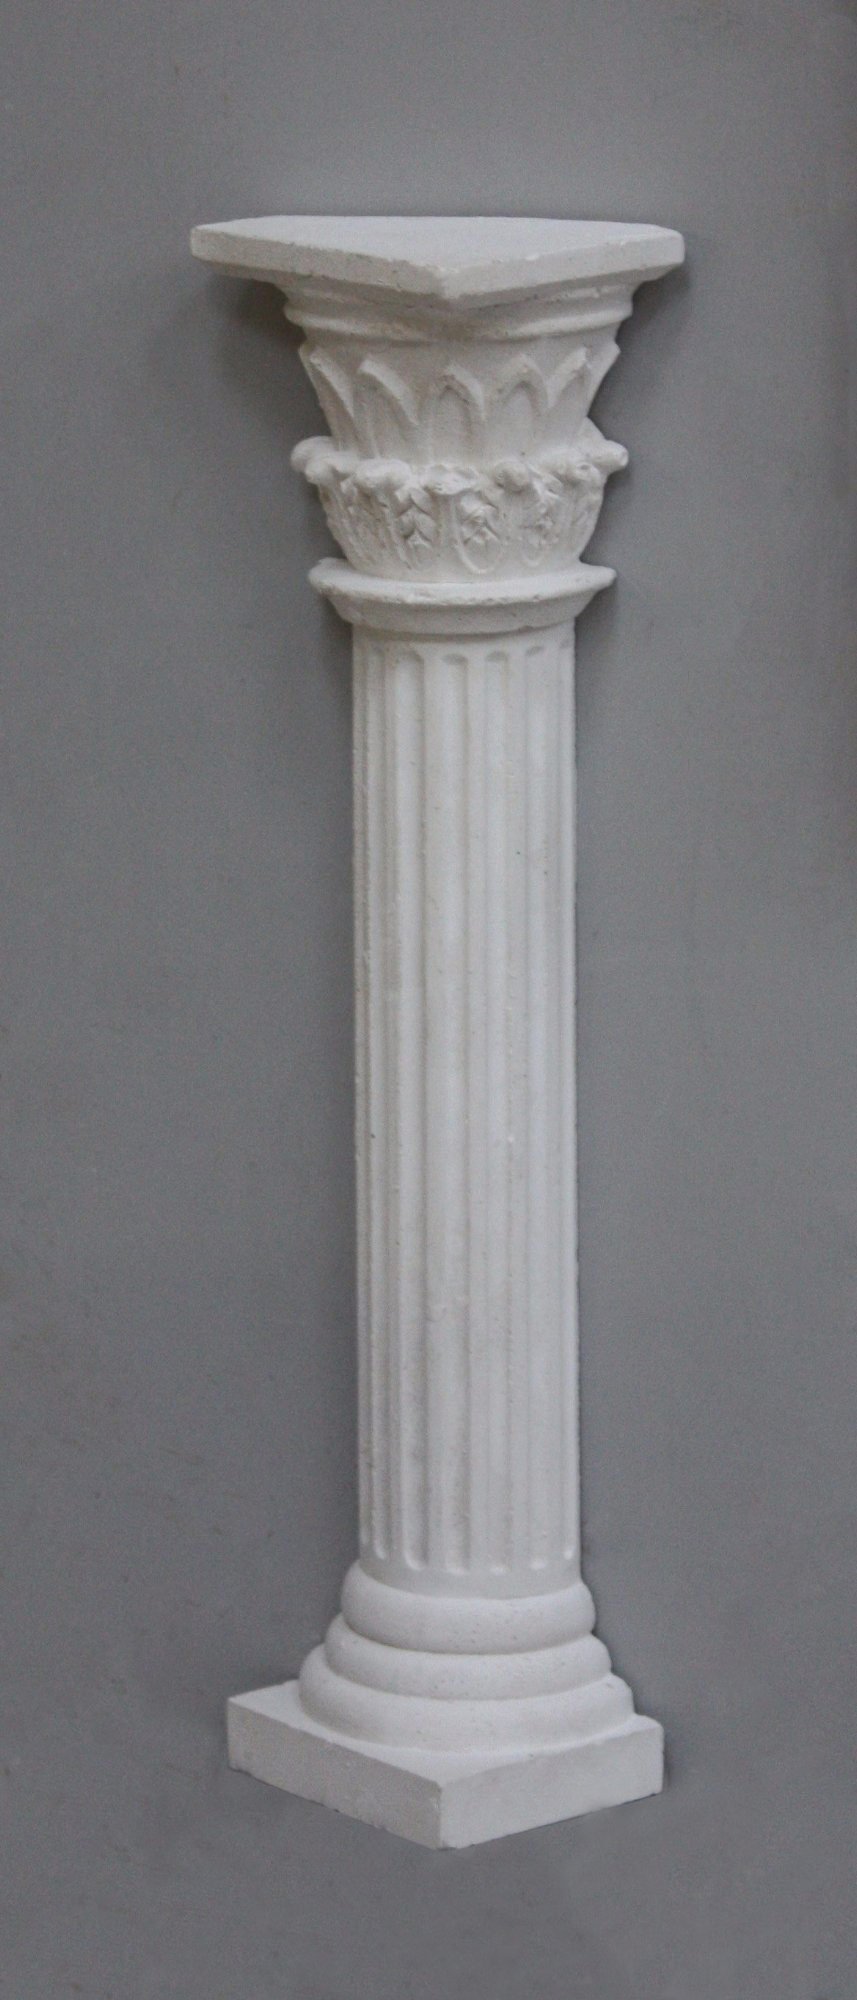 Photo of plaster cast sculpture of Greek half column on a grey background